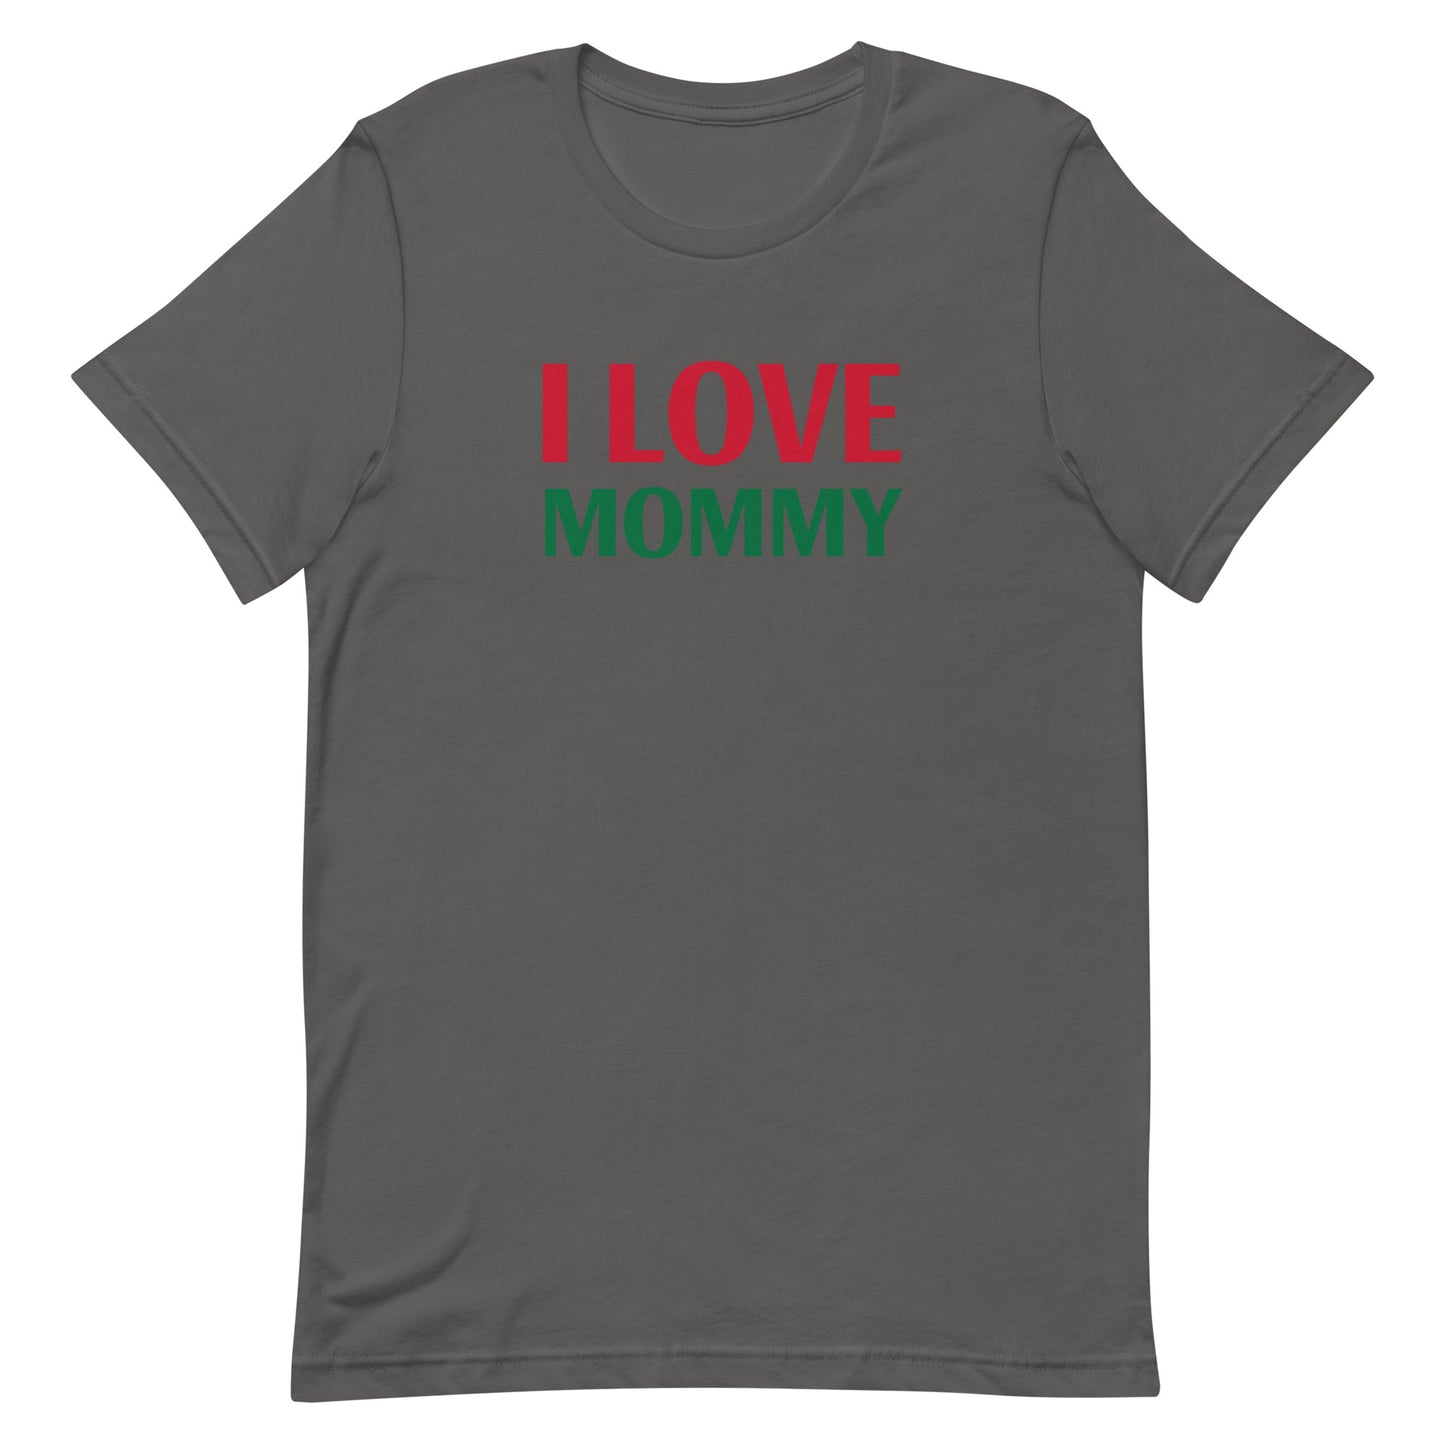 I LOVE MOMMY Unisex t-shirt